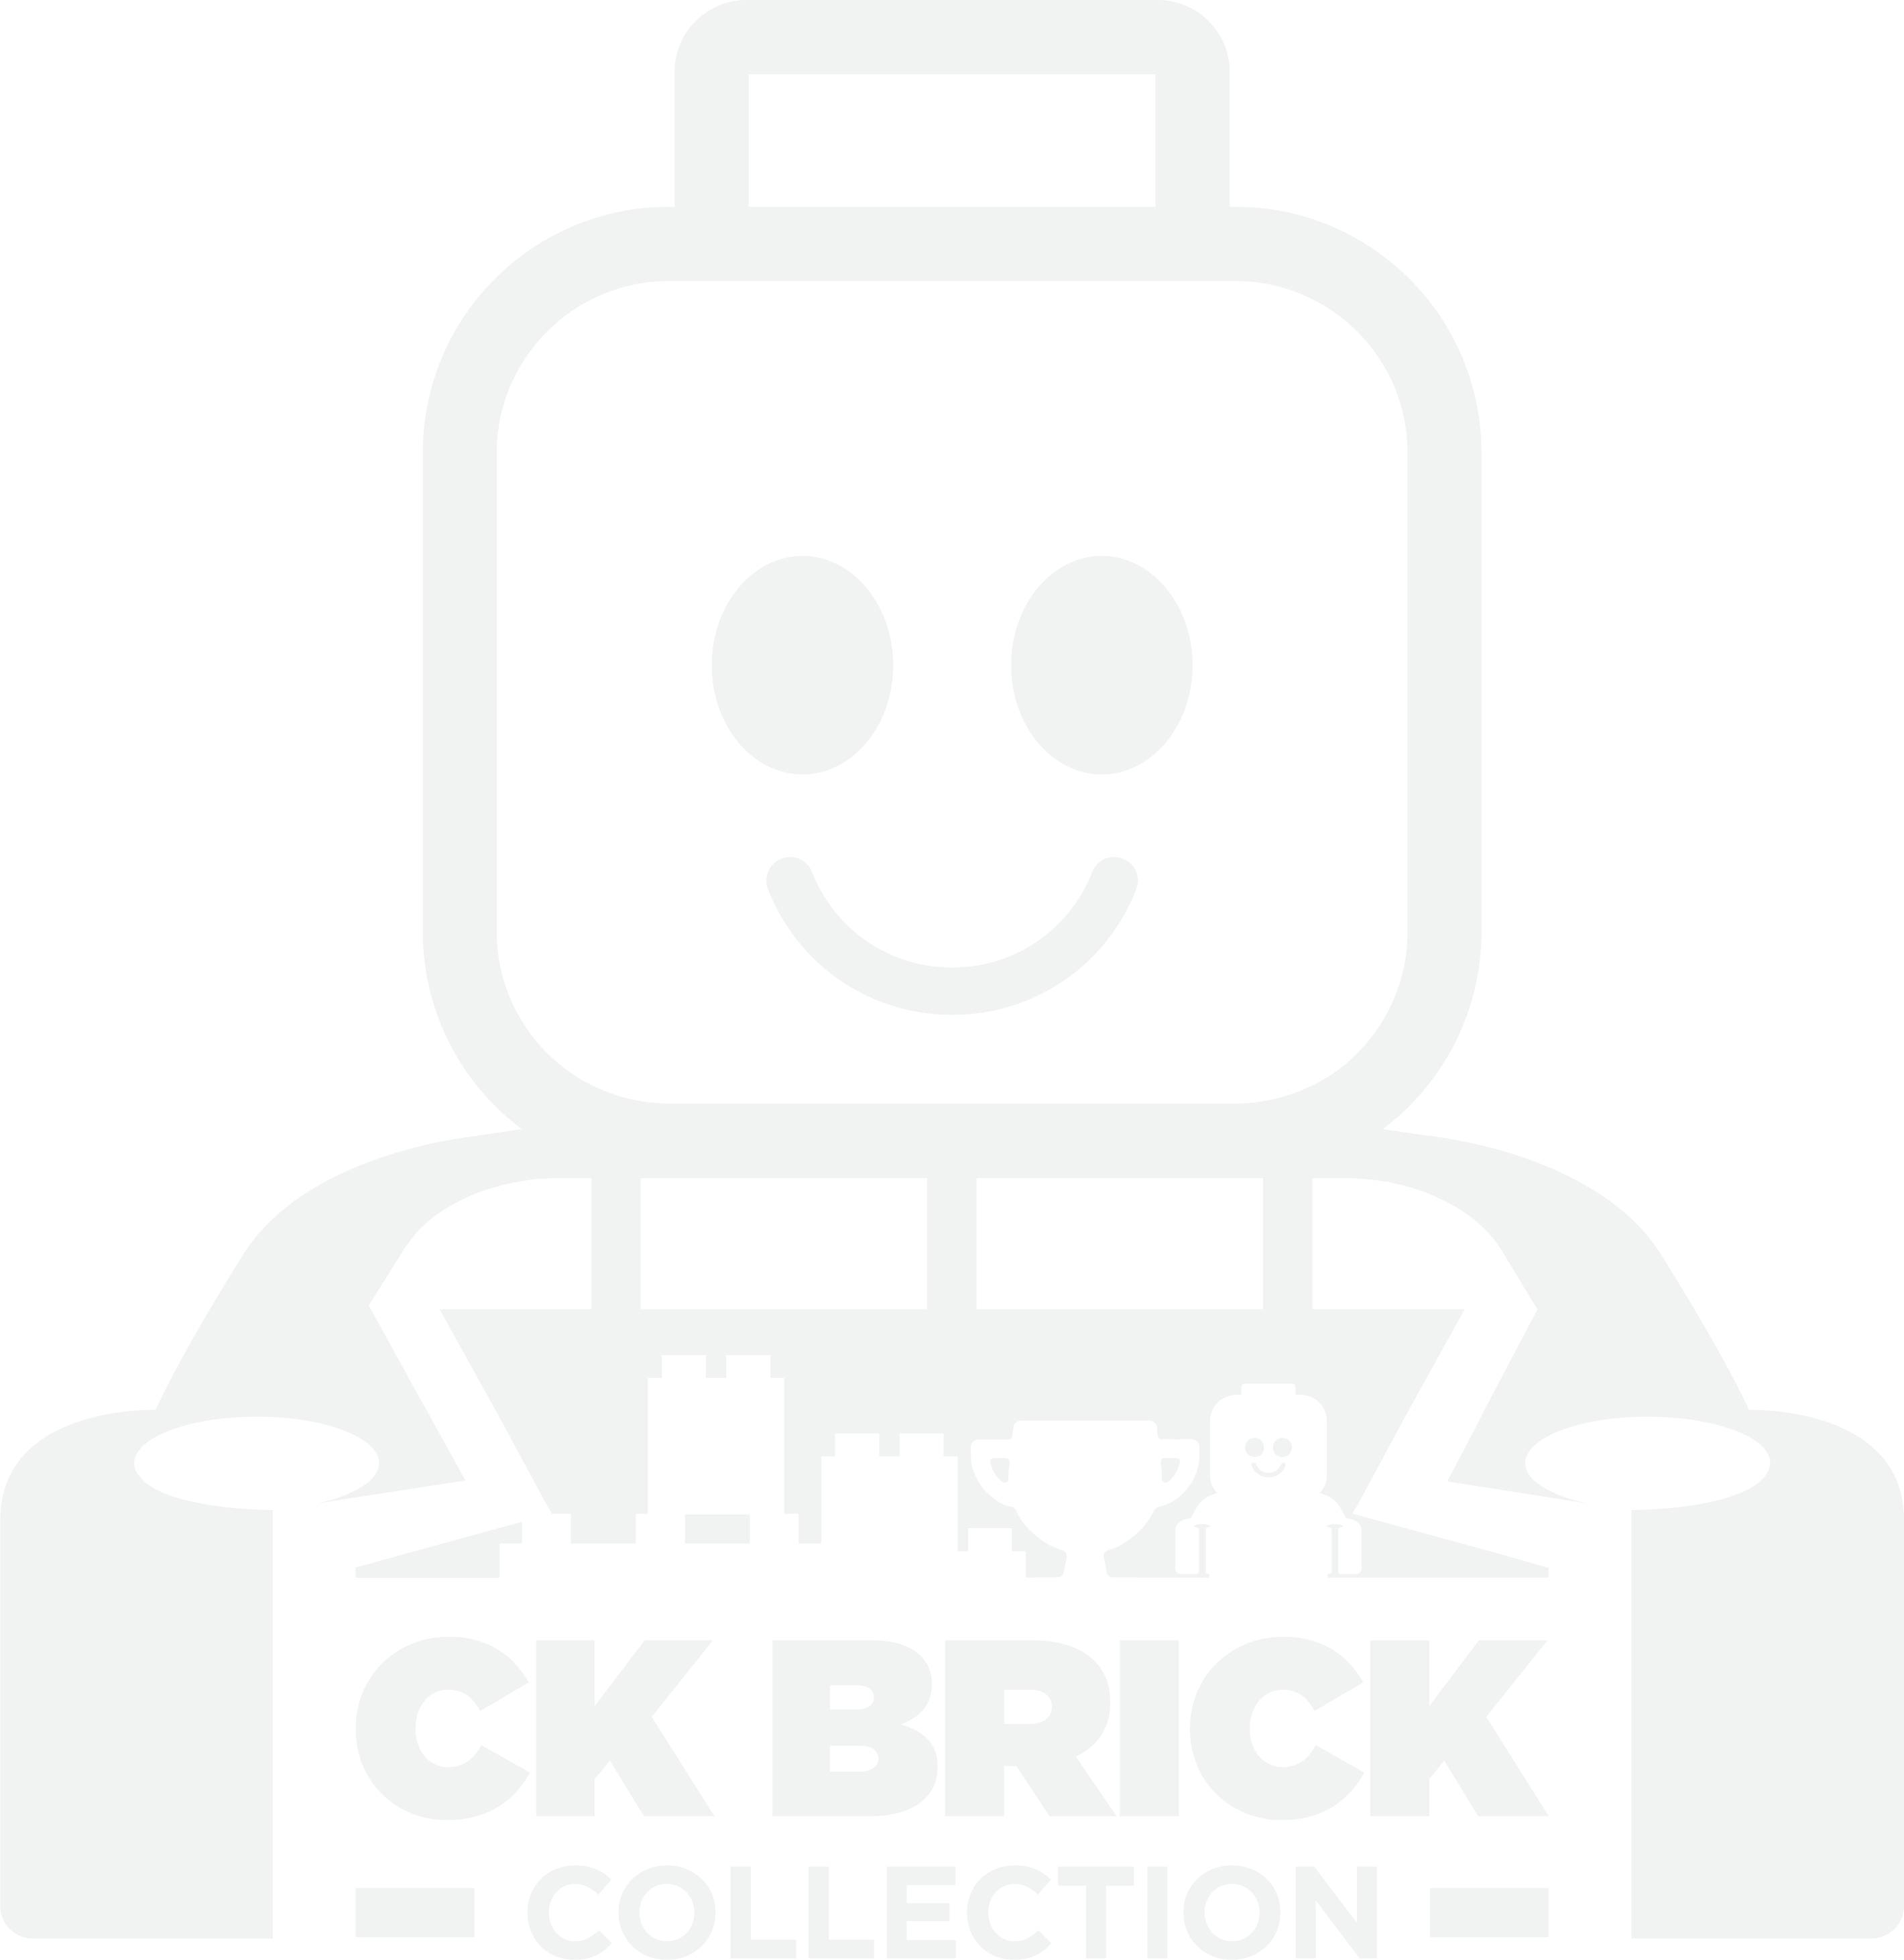 CK BRICK COLLECTION